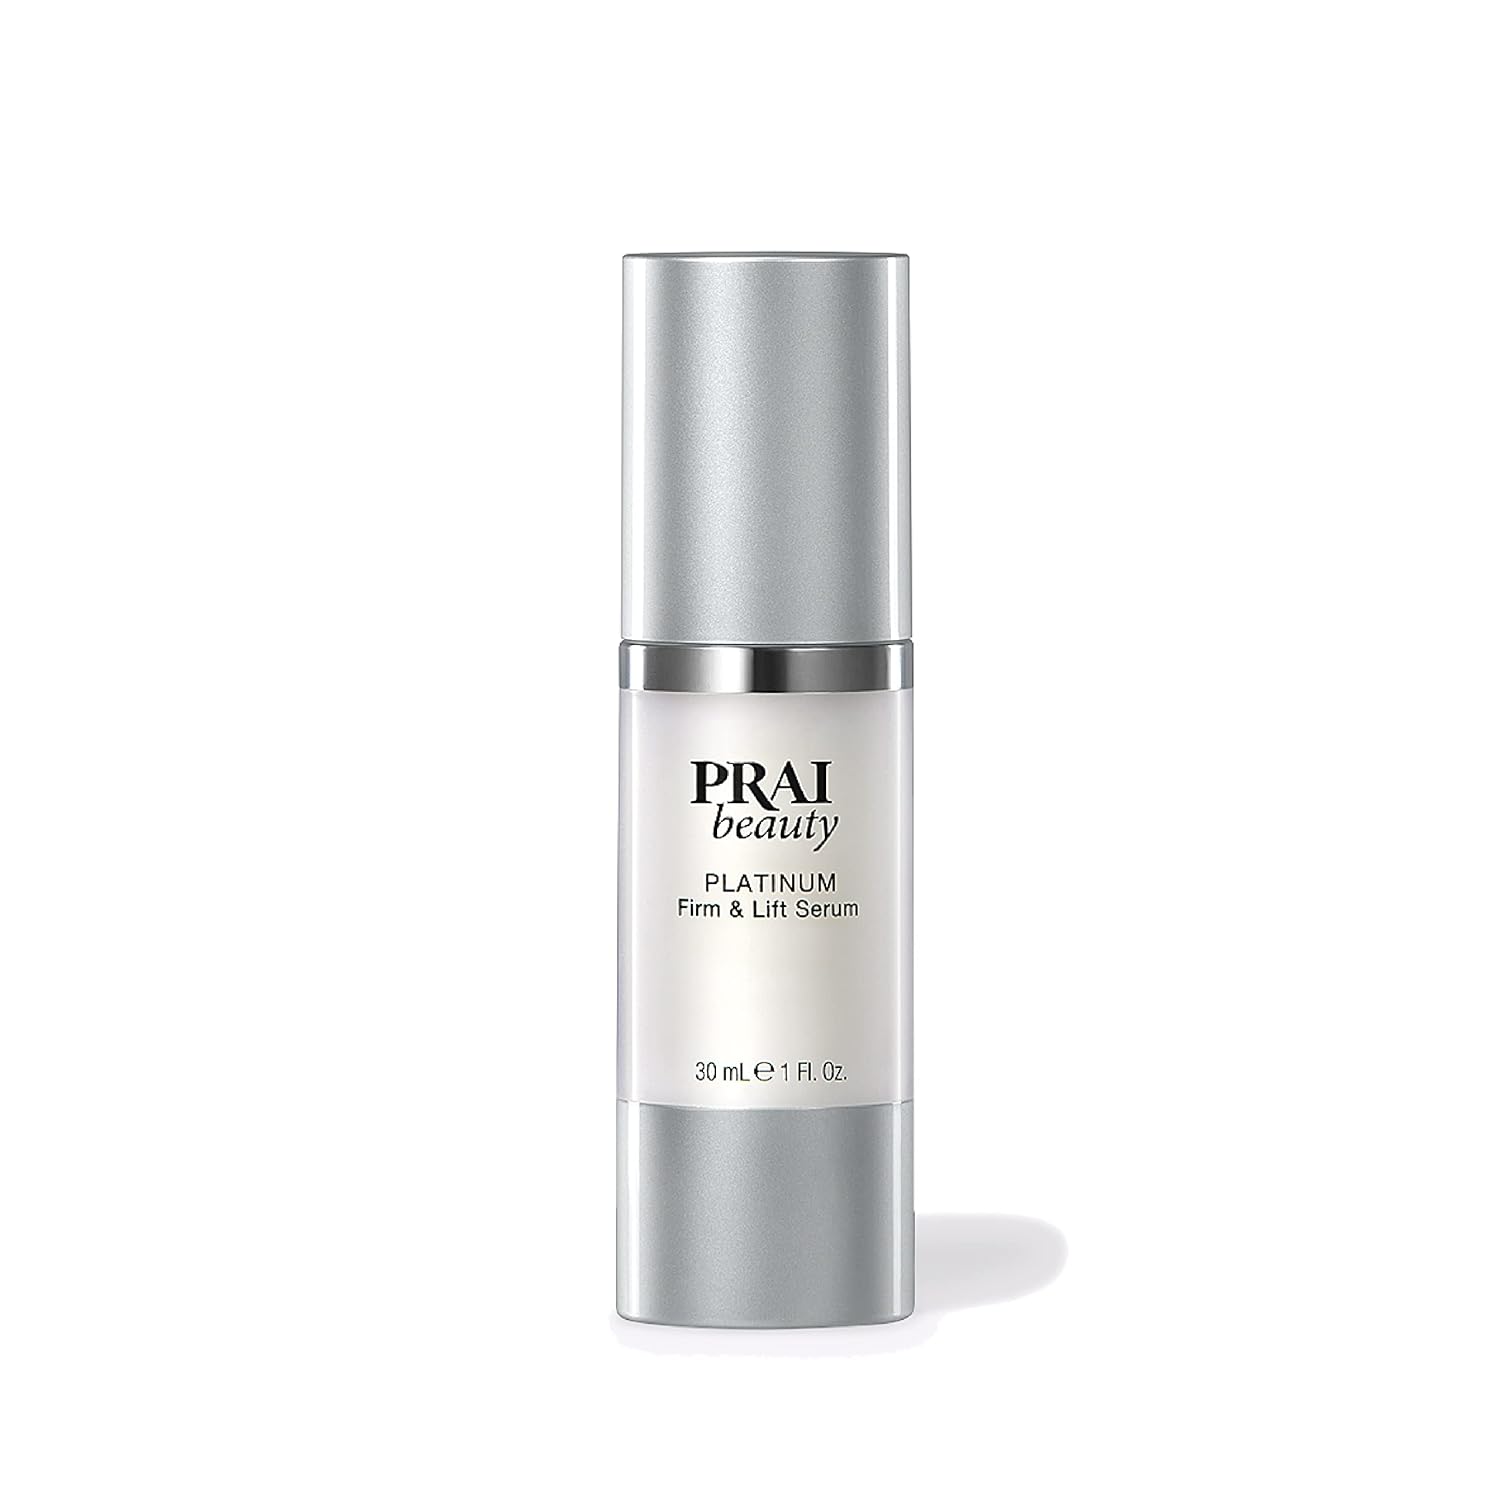 PRAI Beauty Platinum Firm and Lift Serum, Anti-Aging Face Serum for Instant Face Lift, Nourishing and Hydrating Serum, Vegan, Cruelty-Free, 1